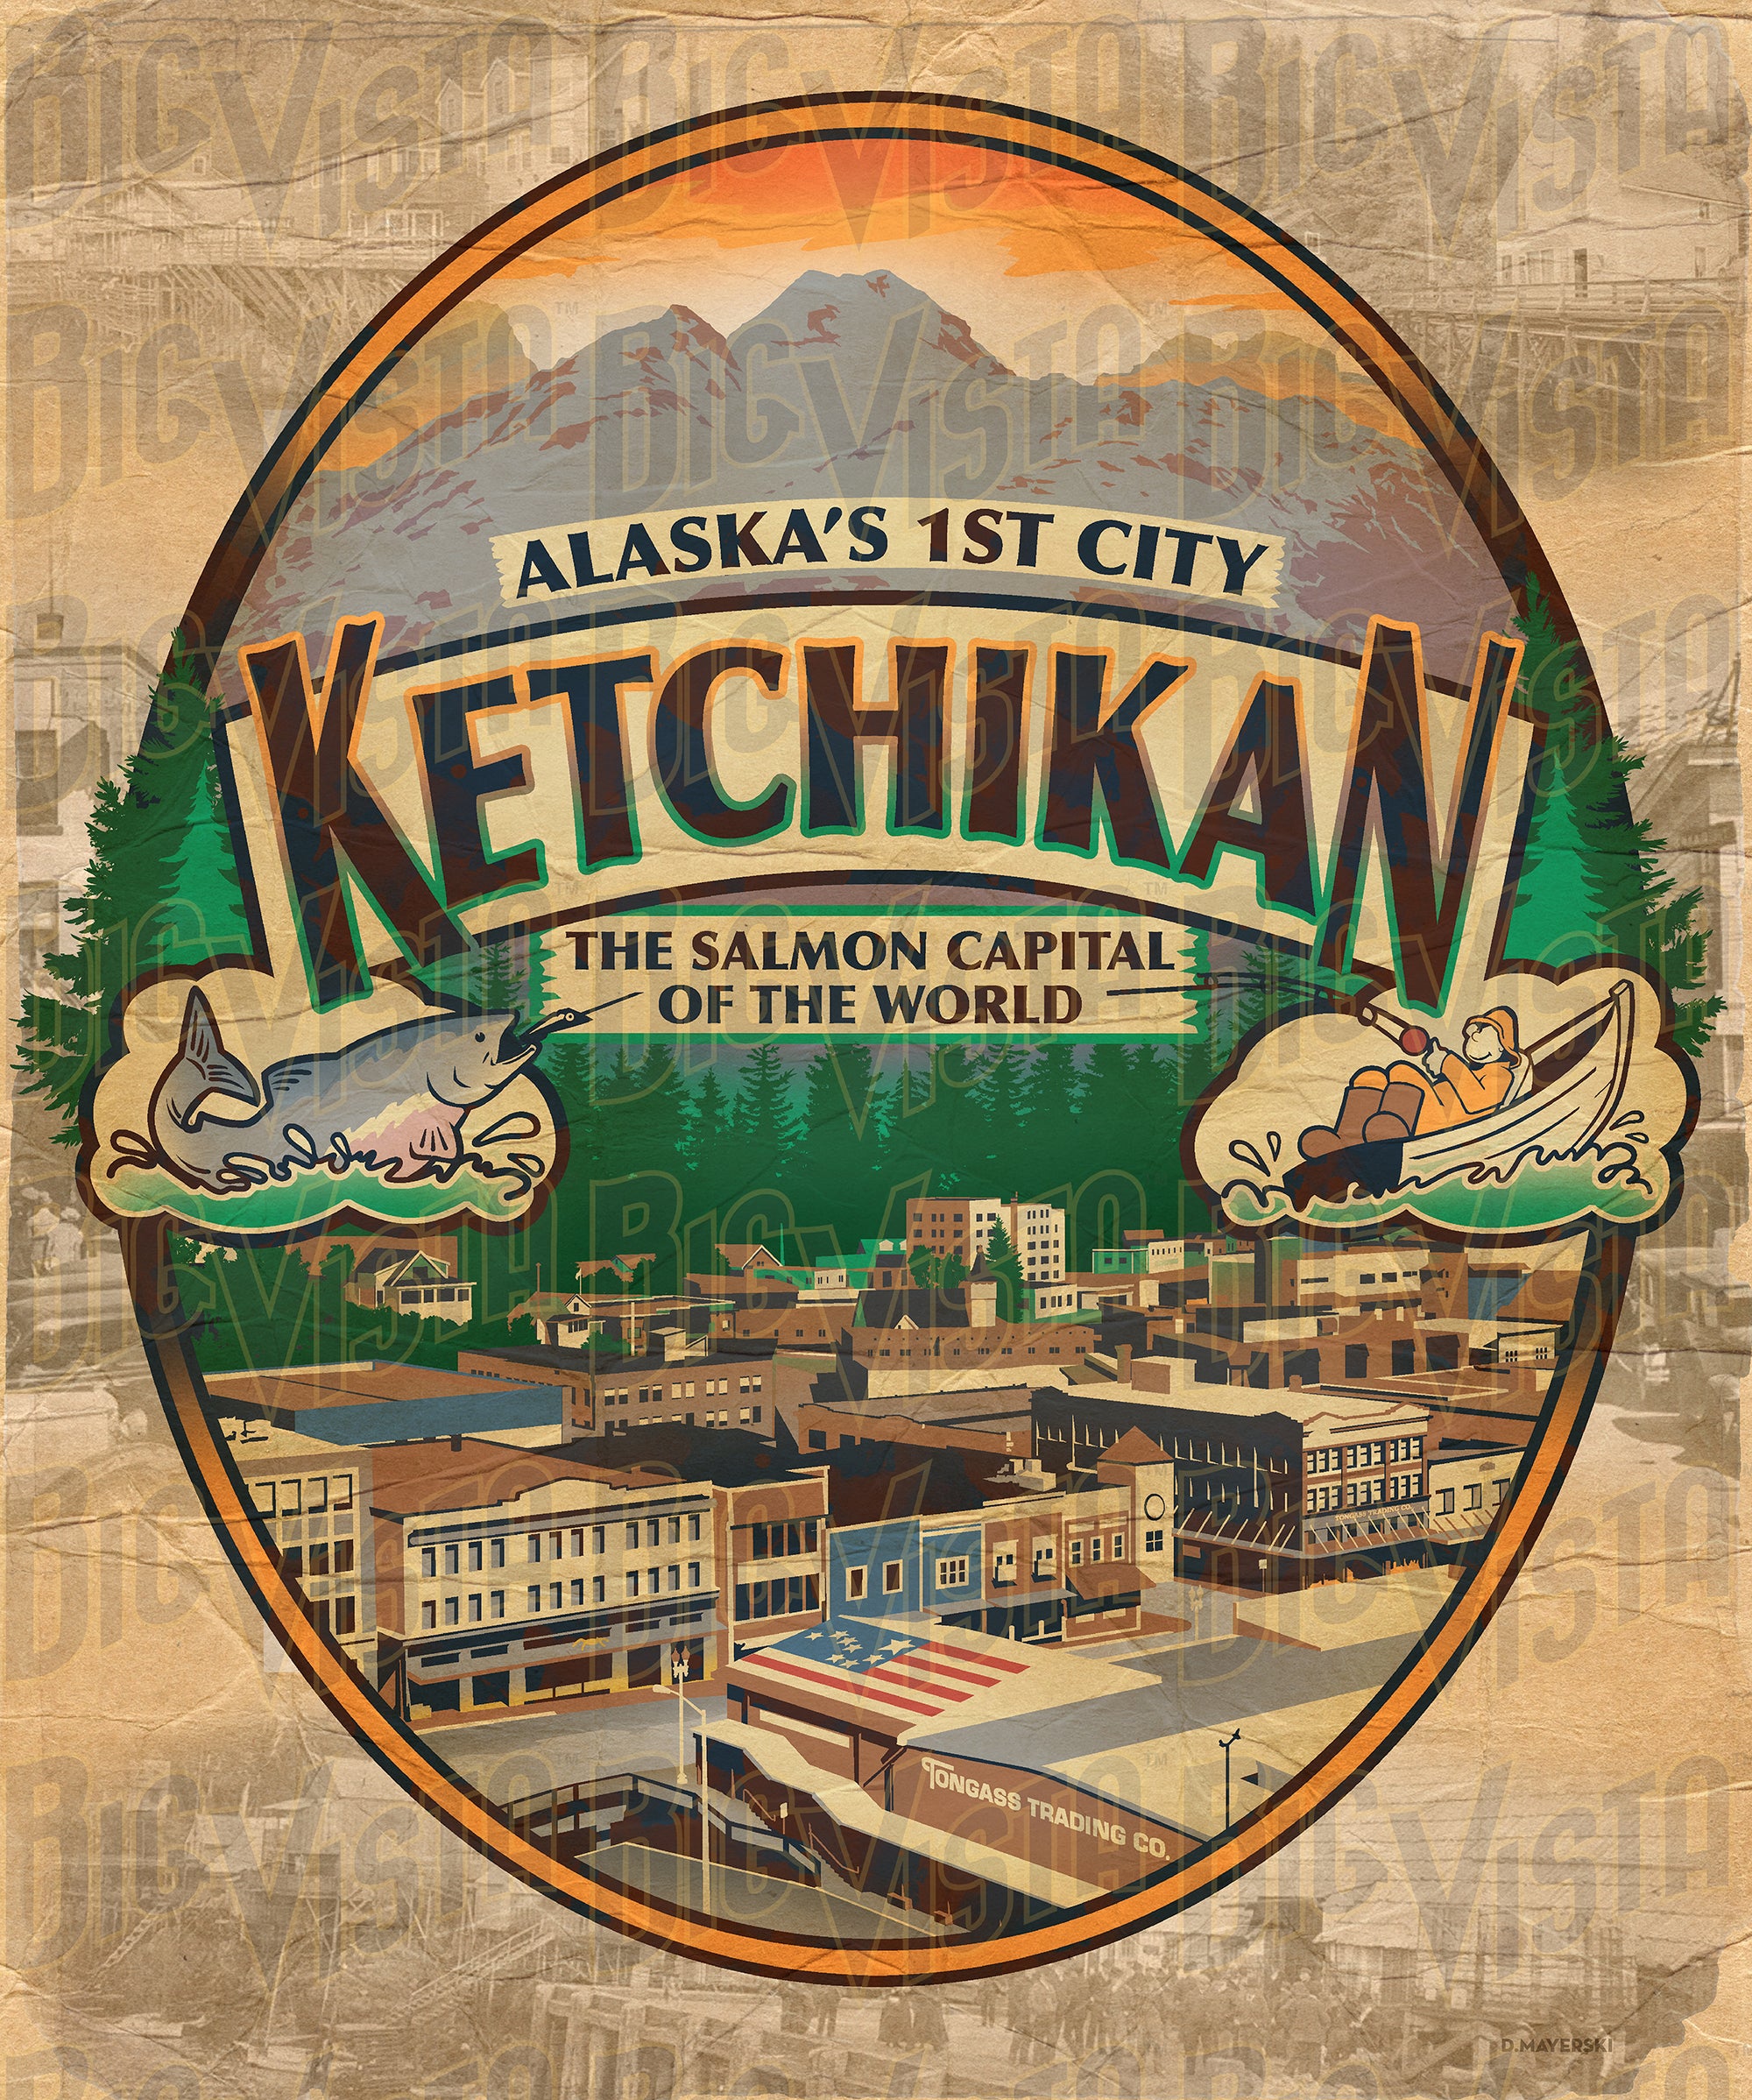 Ketchikan Alaskas 1st City Poster